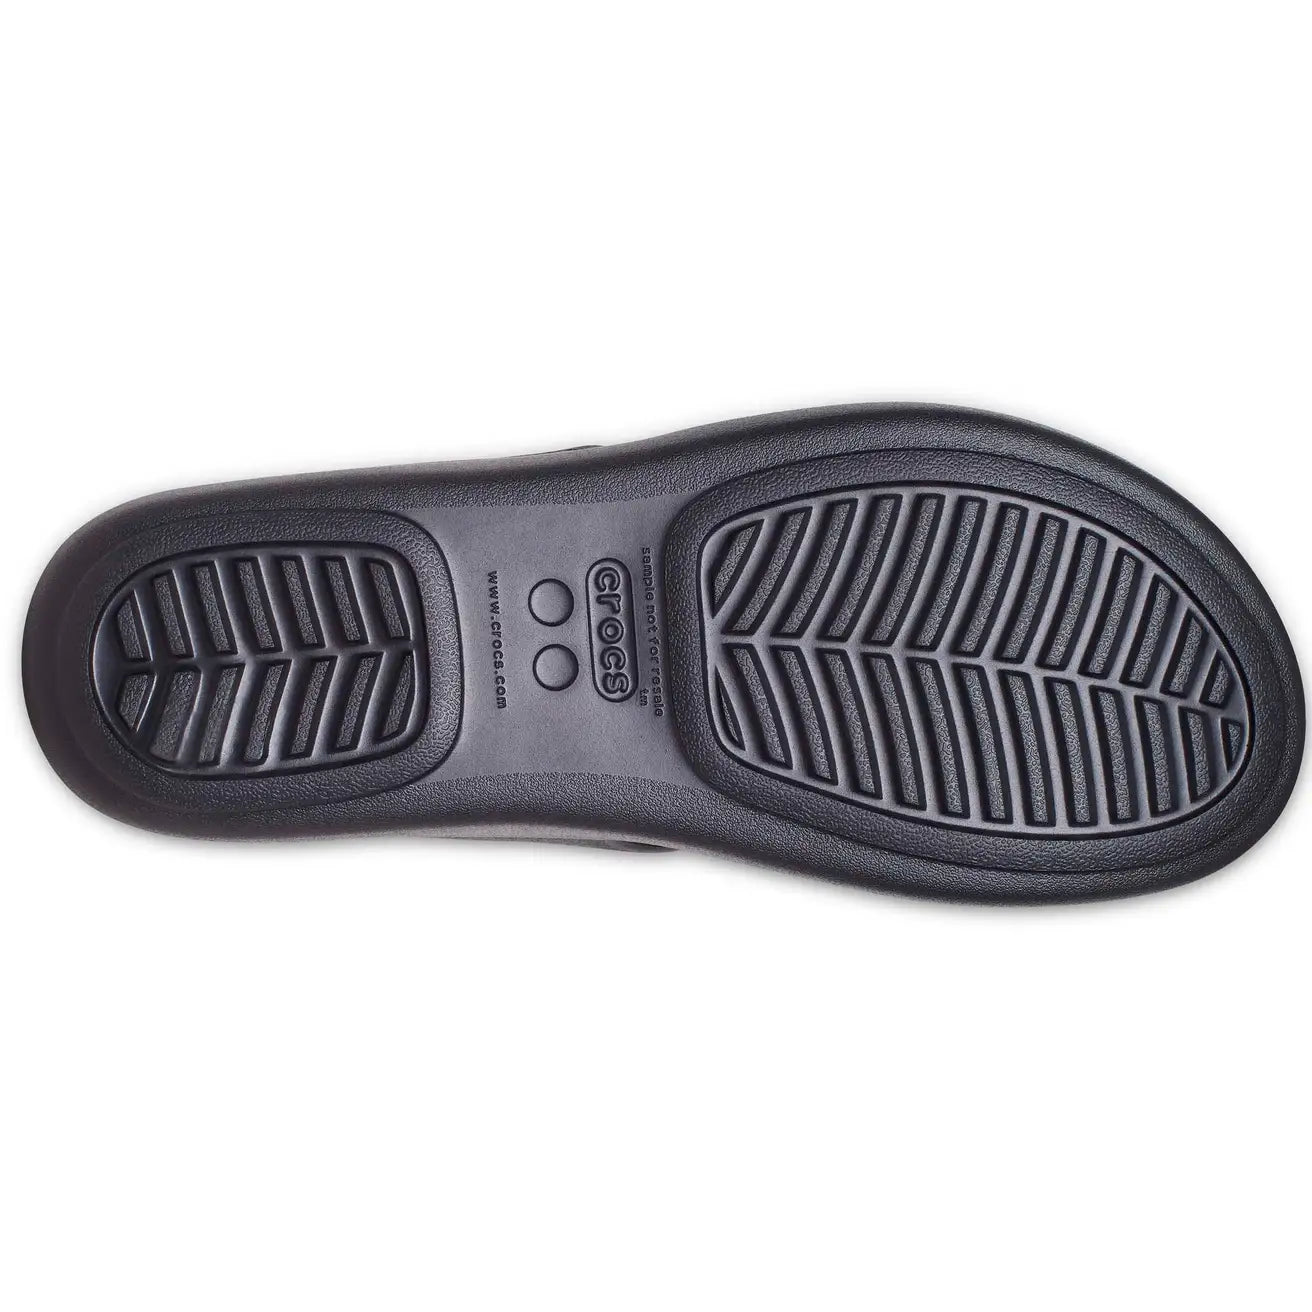 Crocs Boca Wedge Flip Women's Black/Grey - (207417-001) - F - C25